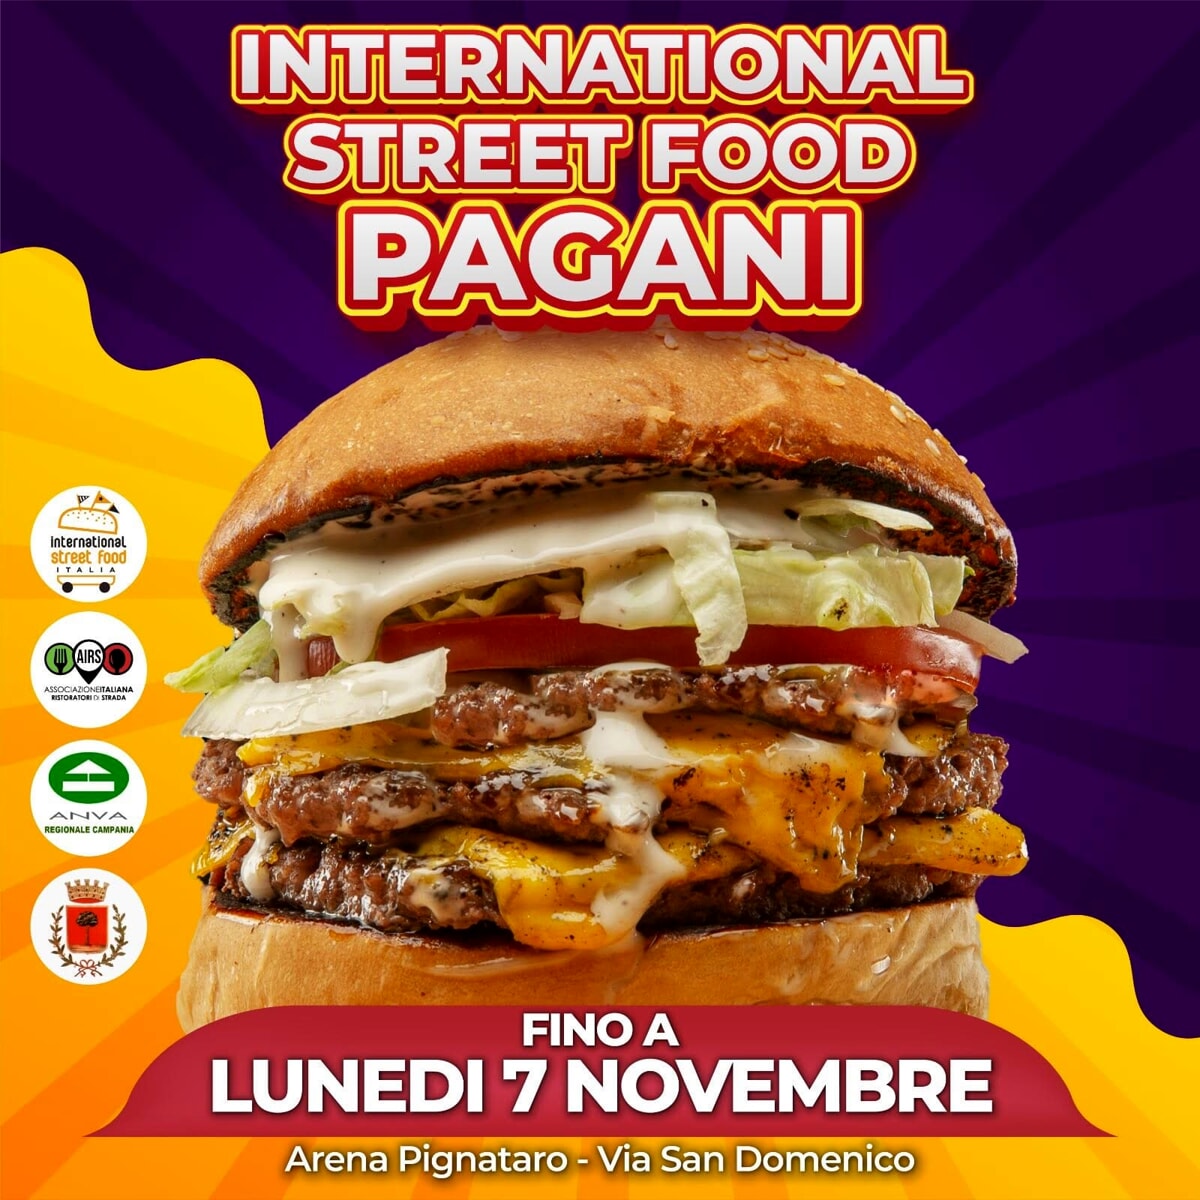 International Street food 2022 a Pagani: si prosegue fino a lunedì 7 novembre